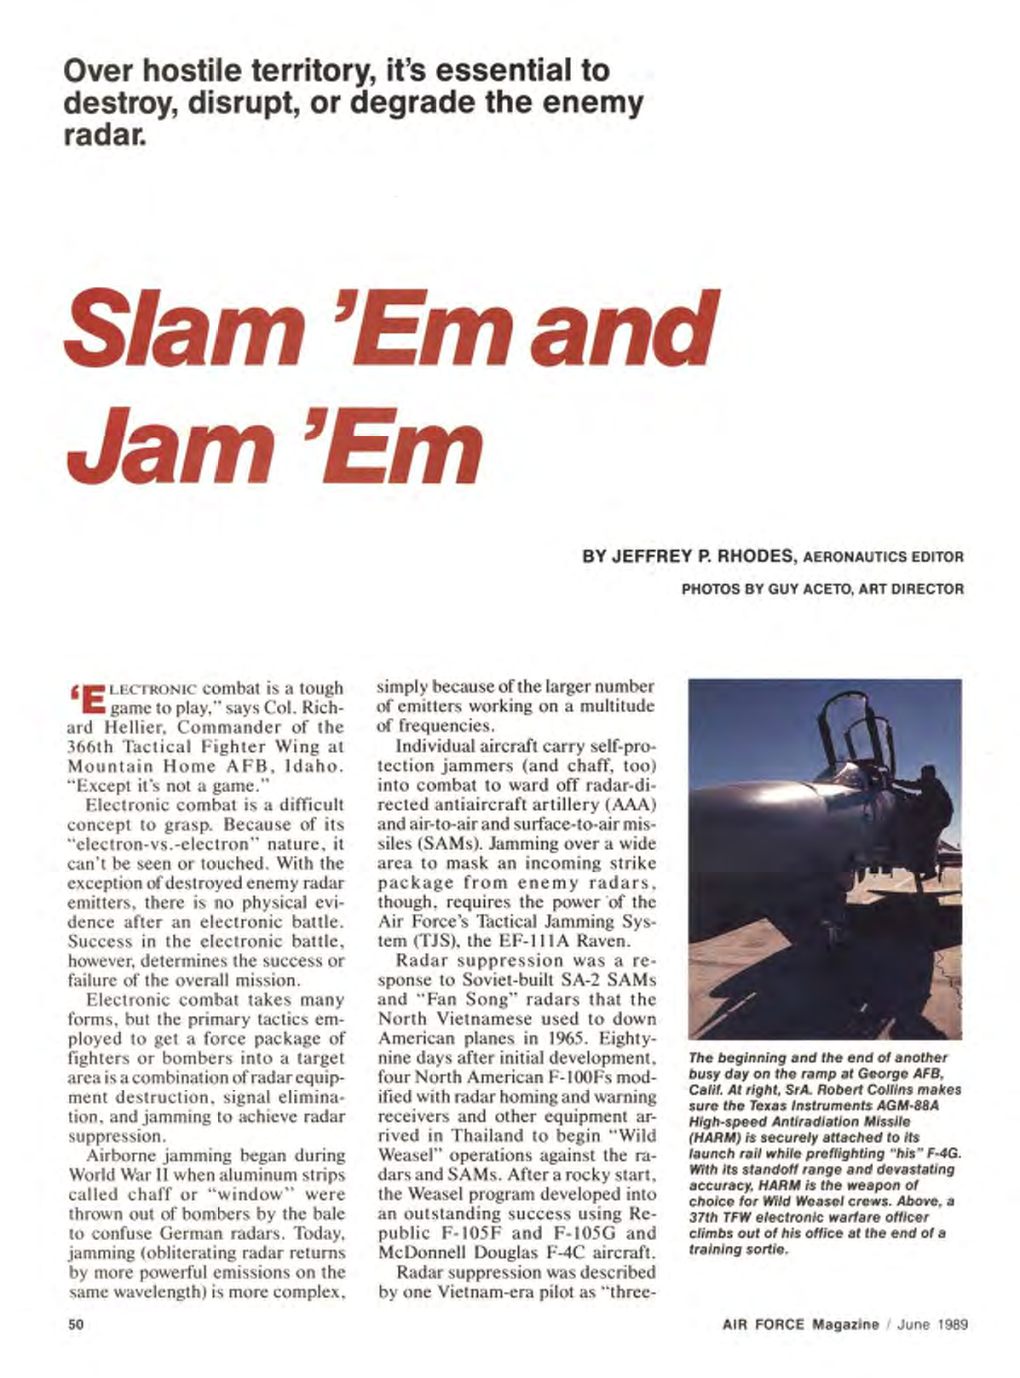 Slam Wm and Jam Wm